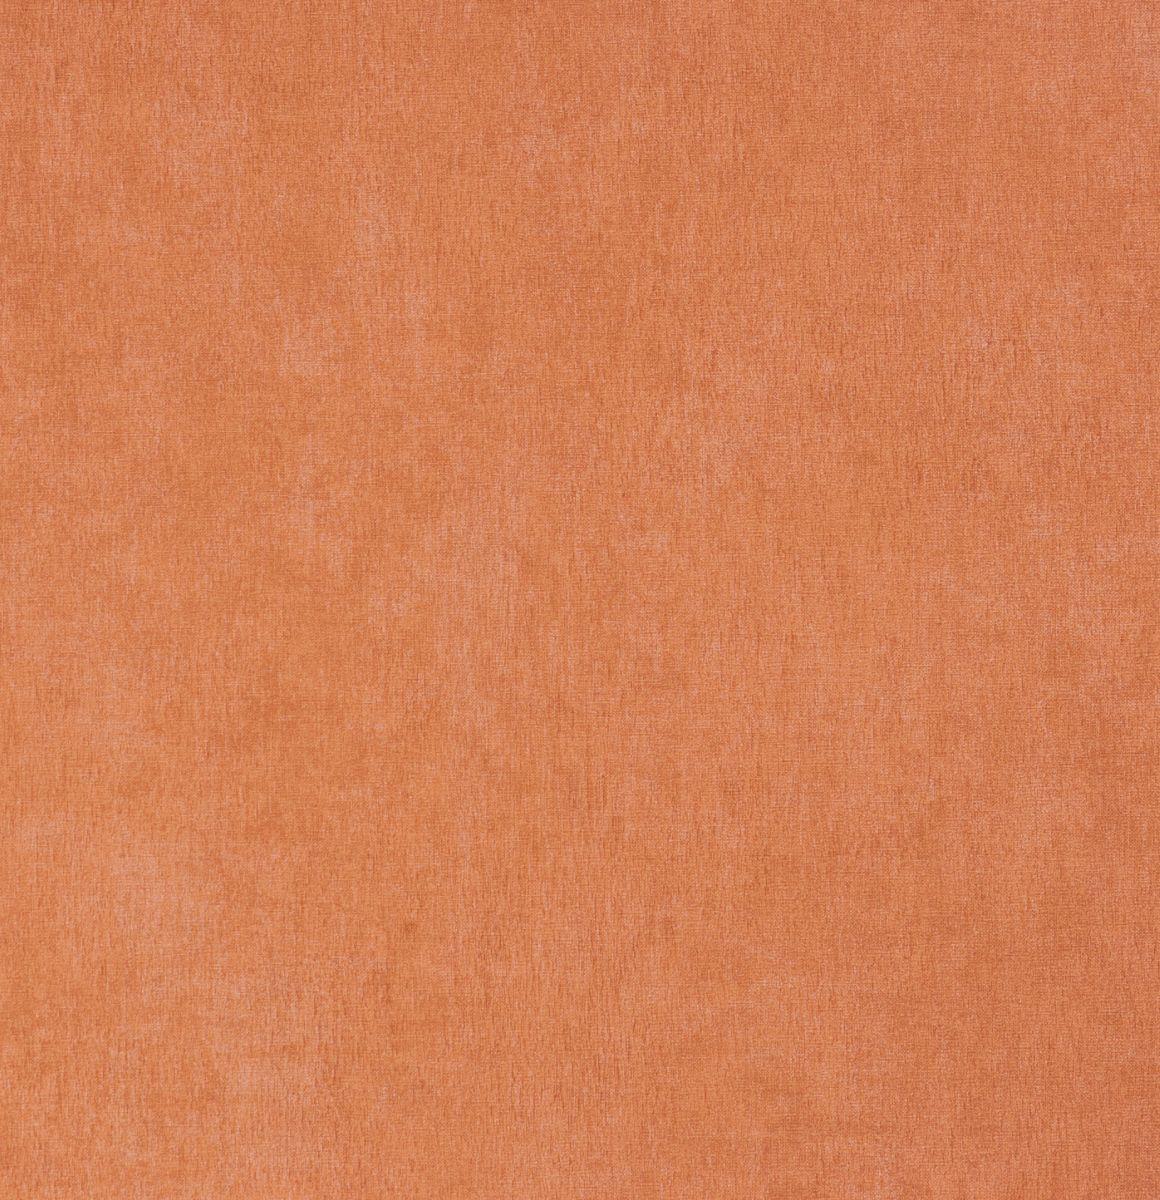 Plain Orange Wallpapers - Top Free Plain Orange Backgrounds ...